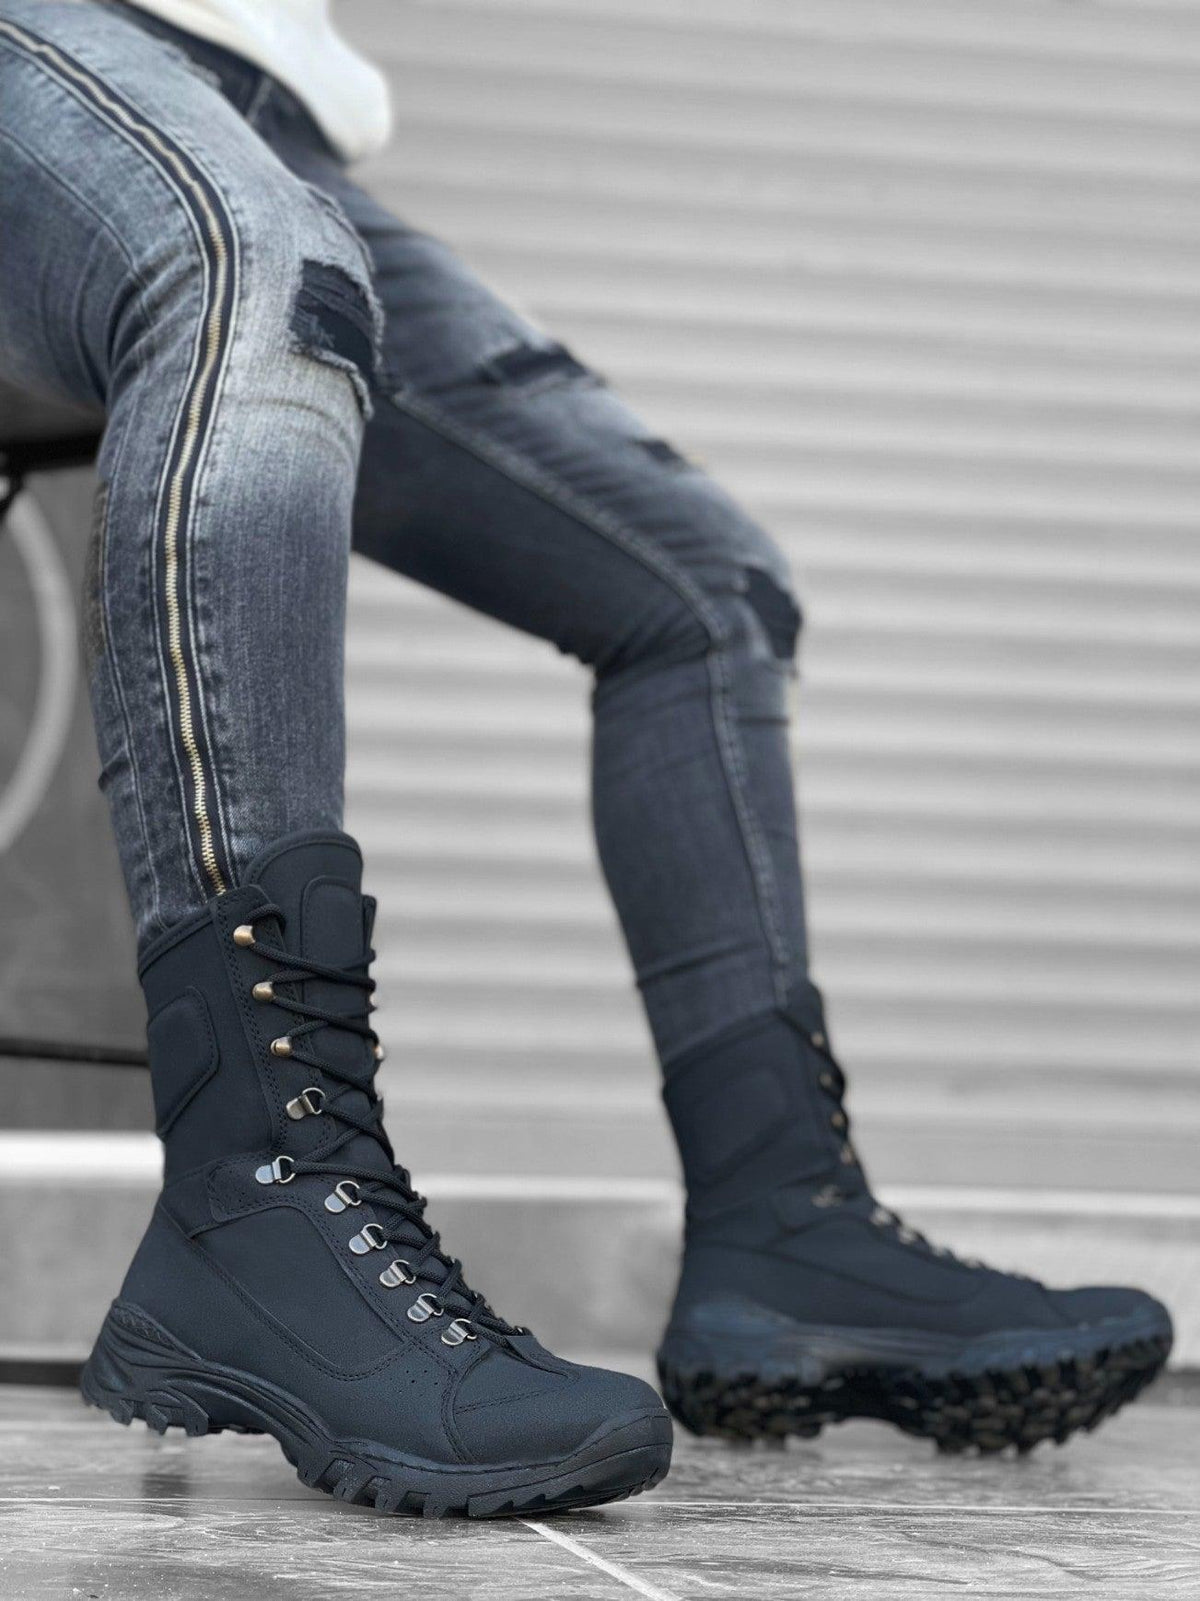 BA0605 Lace-up Black Nubuck Military Boots - STREET MODE ™